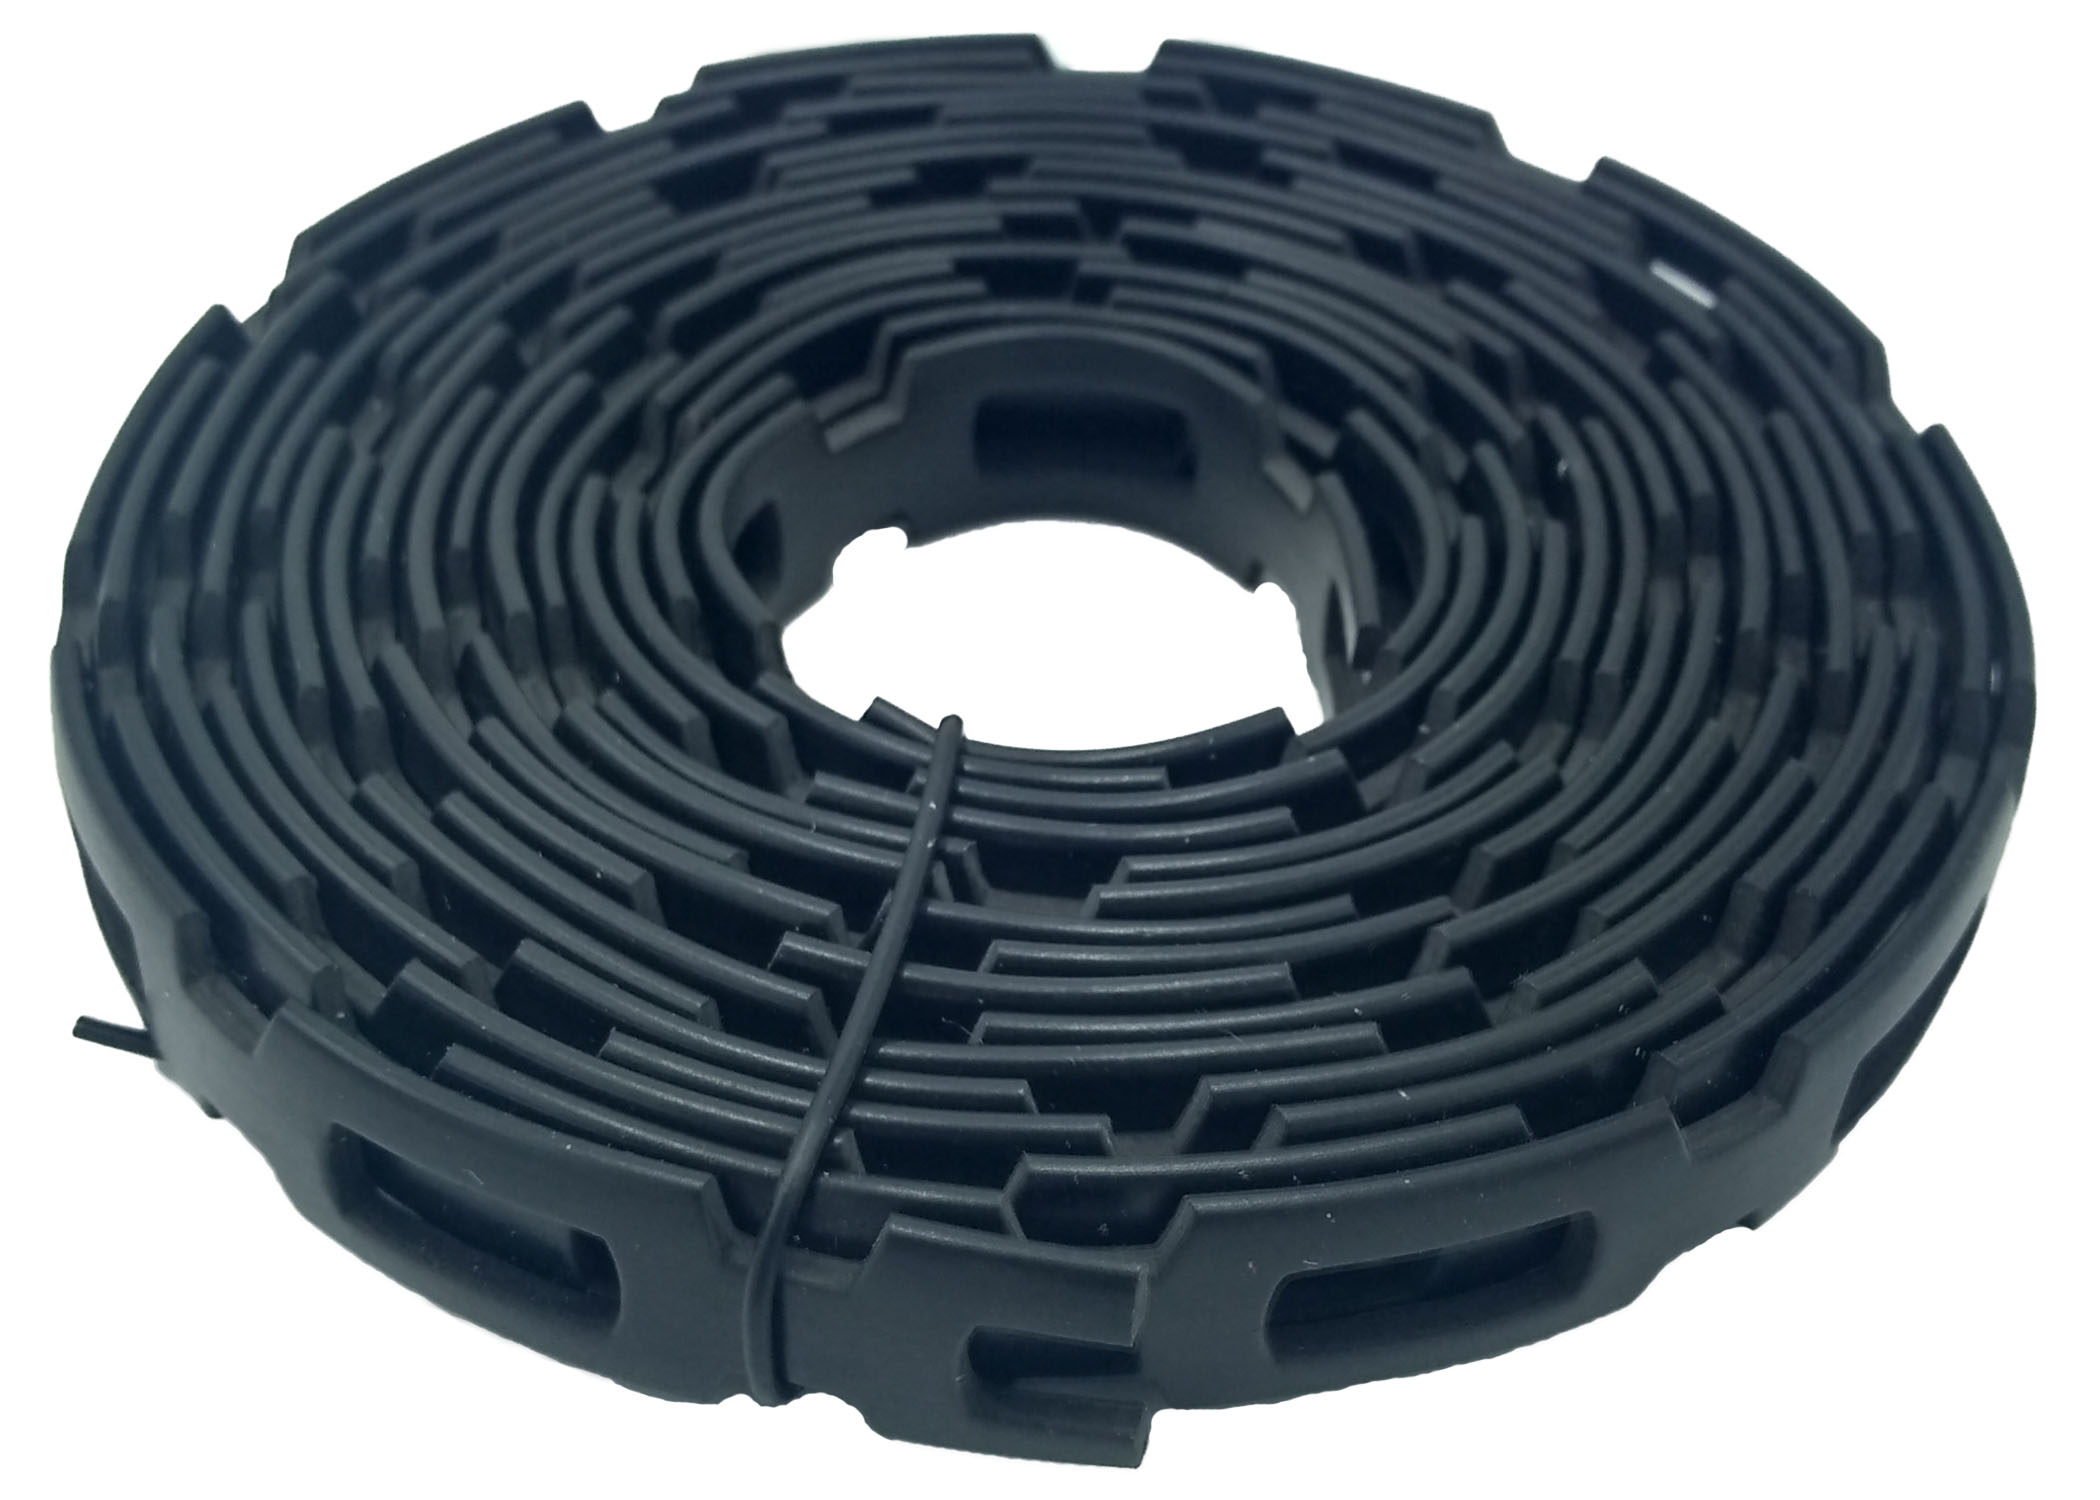 Zenport GA305 Chain Lock Tie, 9.84-Feet Roll, Black